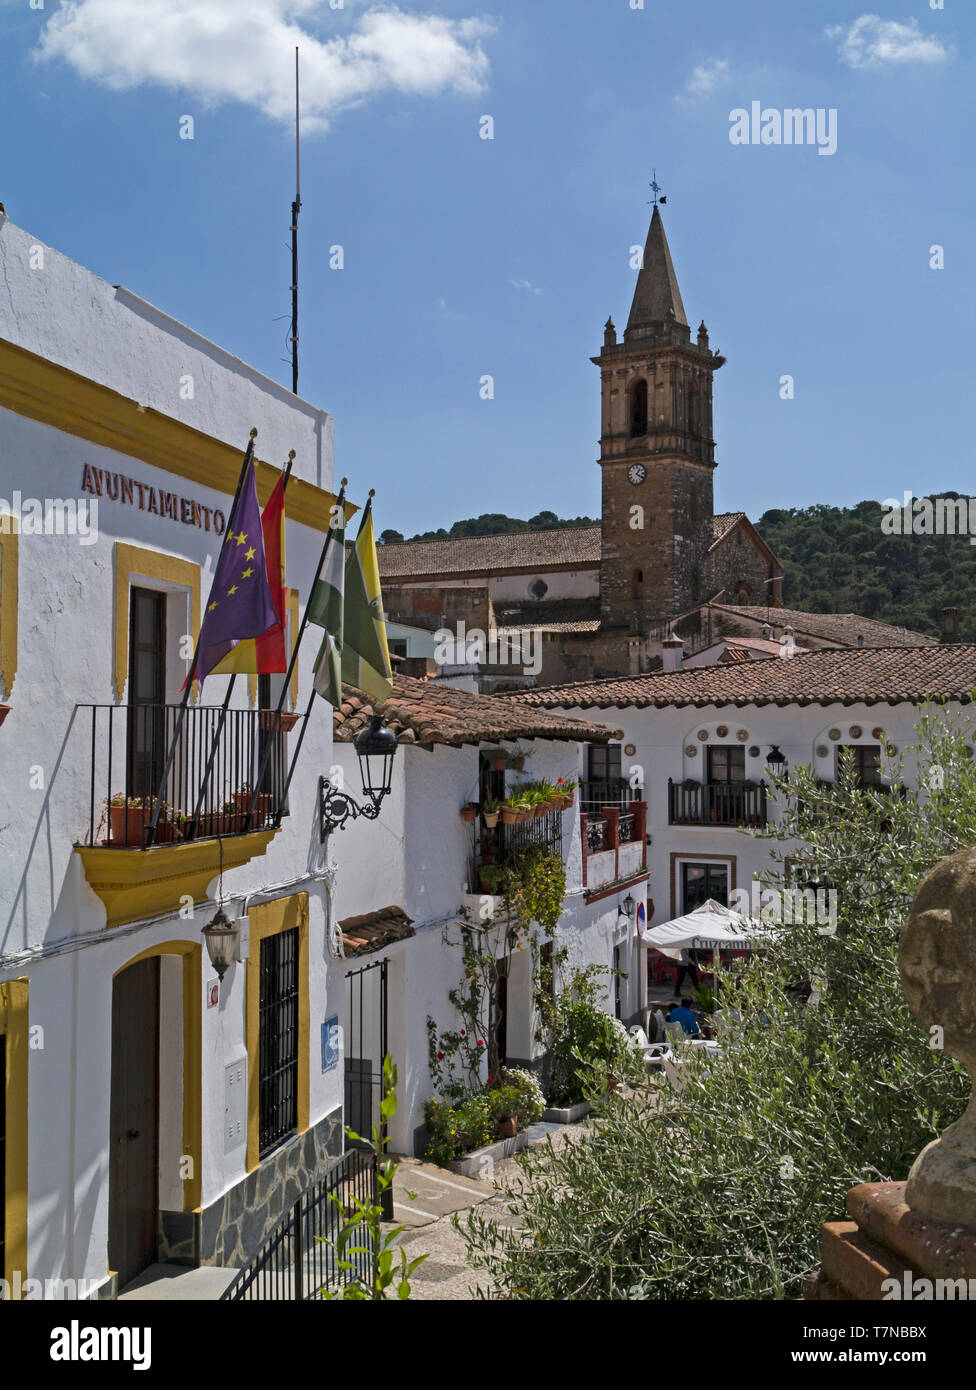 Ayuntamiento de Alajar, the town hall of the village of Alajar,Sierra de Aracena,Heulva,Andalucia,Spain Stock Photo